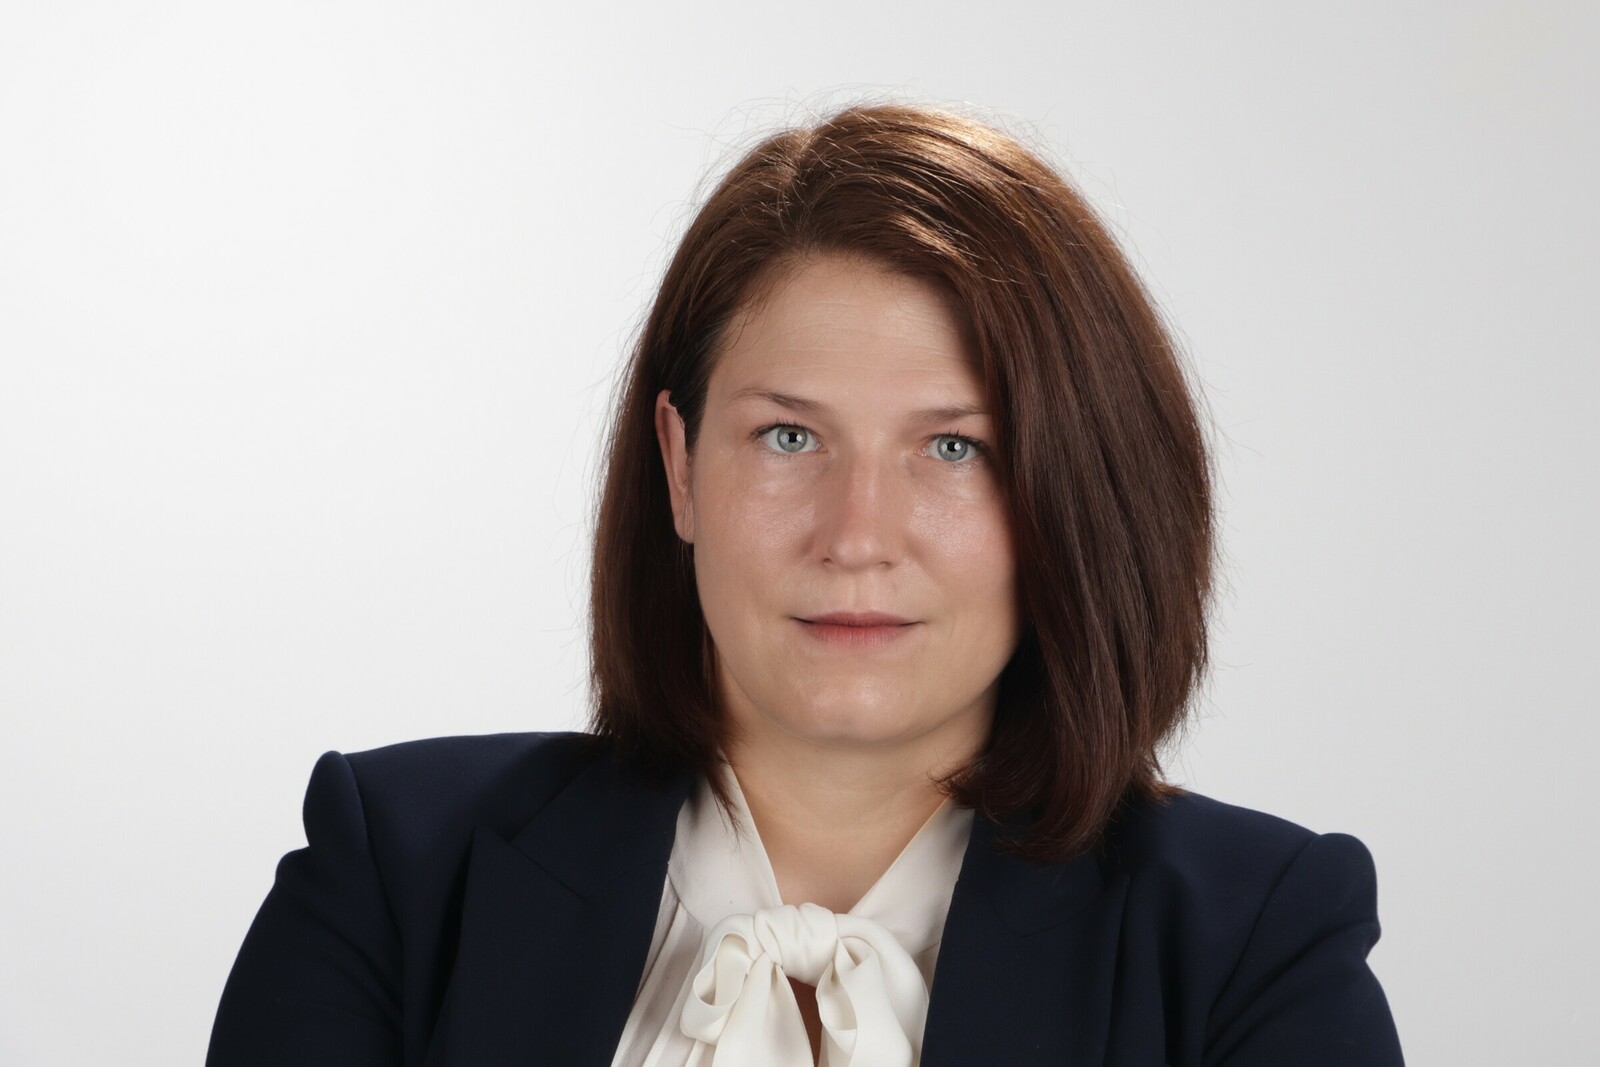 Alena Eckart leitet seit 1. April den Bereich Fleet & Business bei Jaguar Land Rover Deutschland.